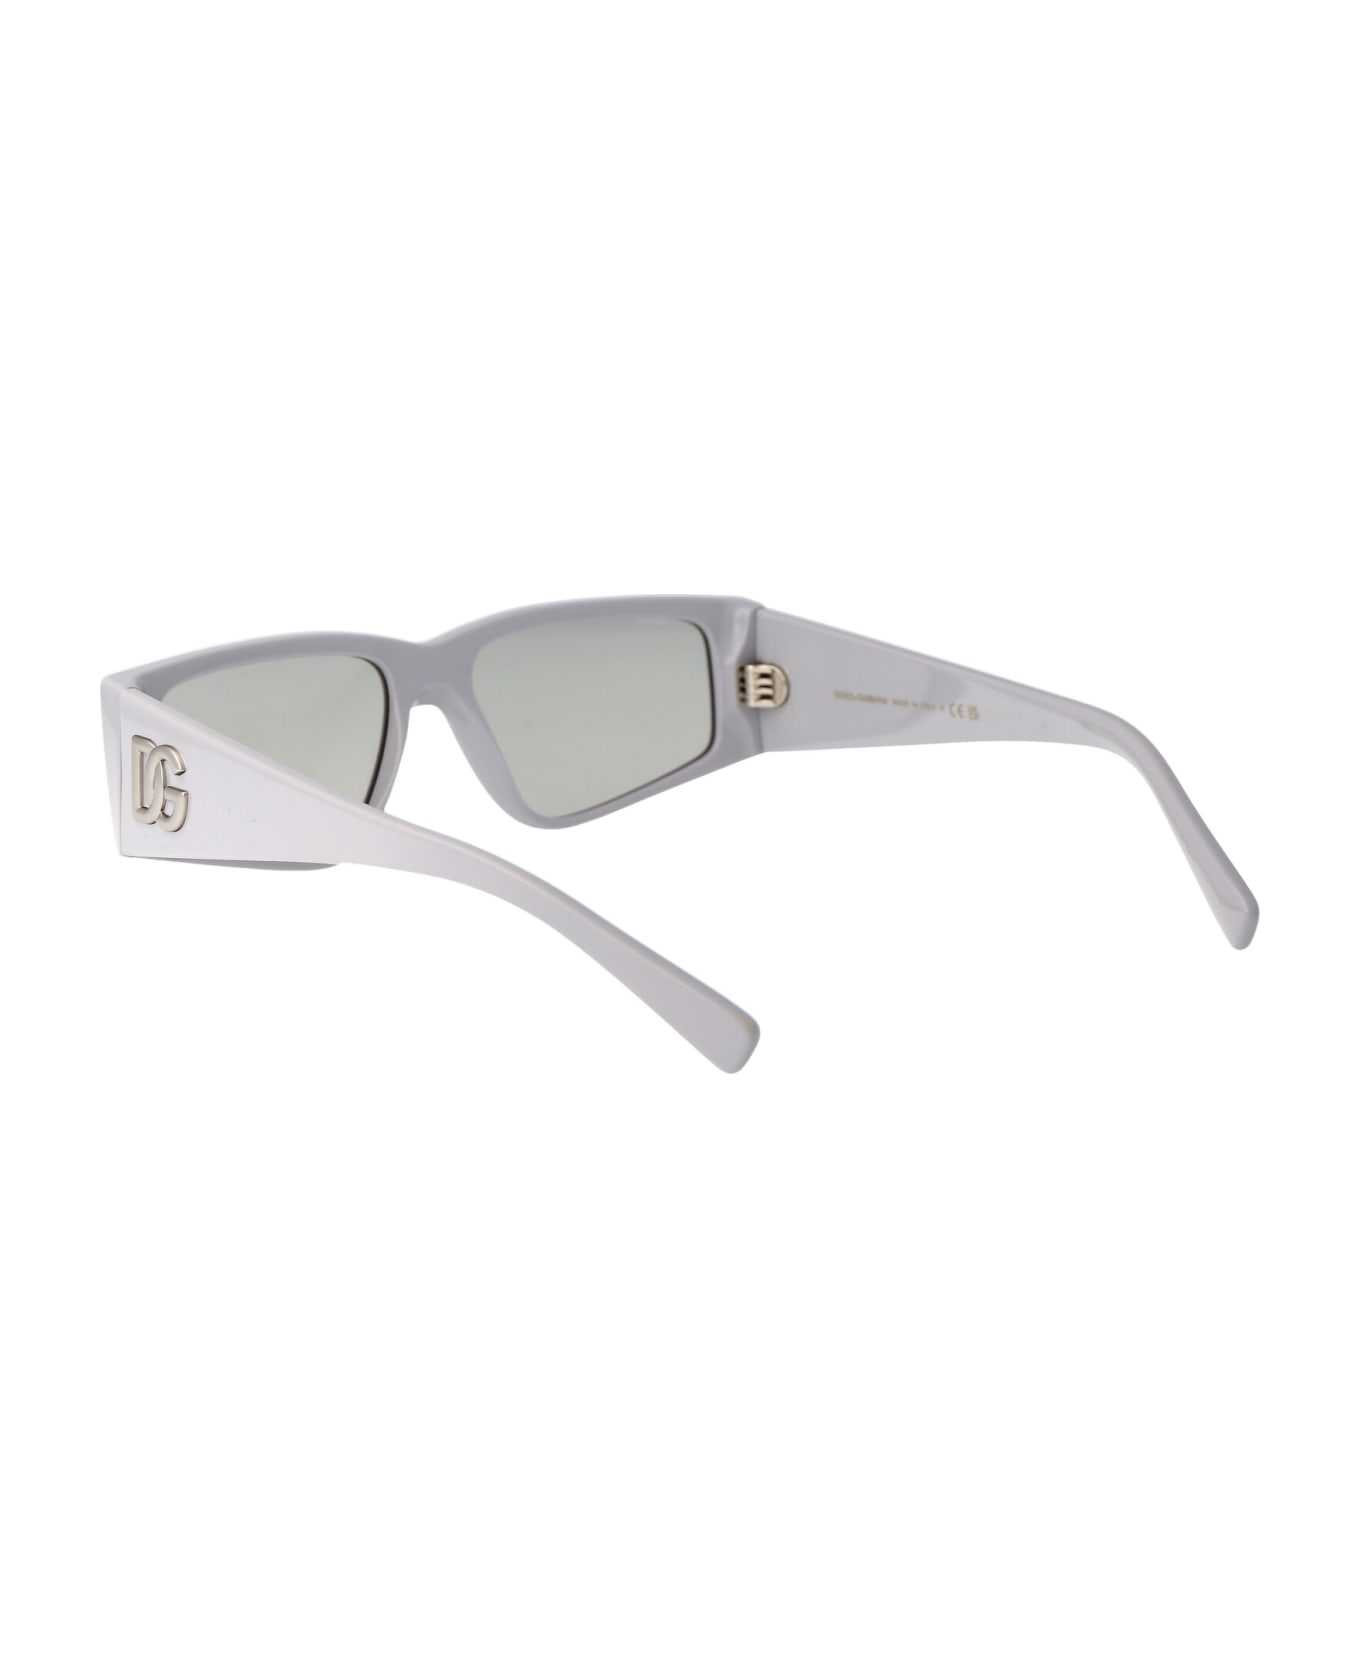 Dolce & Gabbana Eyewear 0dg4453 Sunglasses - 341887 Light Grey サングラス